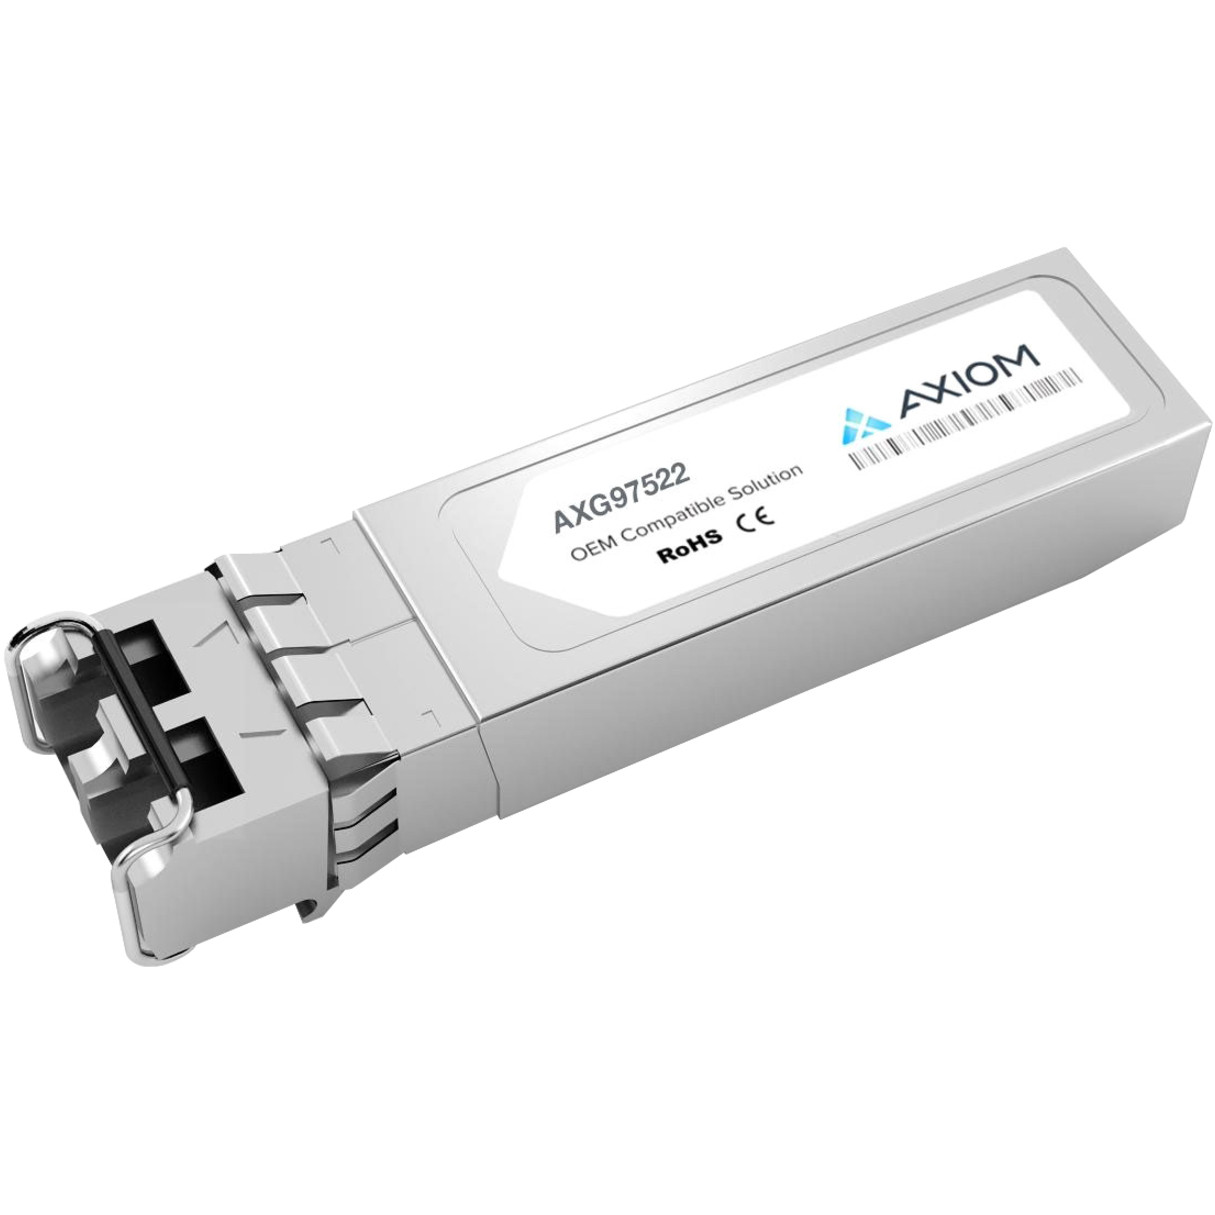 Axiom Memory Solutions 10GBASE-LR SFP+ Transceiver for Fluke Networks- OPVXG-SFP-PLUS-LR -TAA Compliant100% FLUKE Compatible 10GBASE-LR SFP+ AXG97522